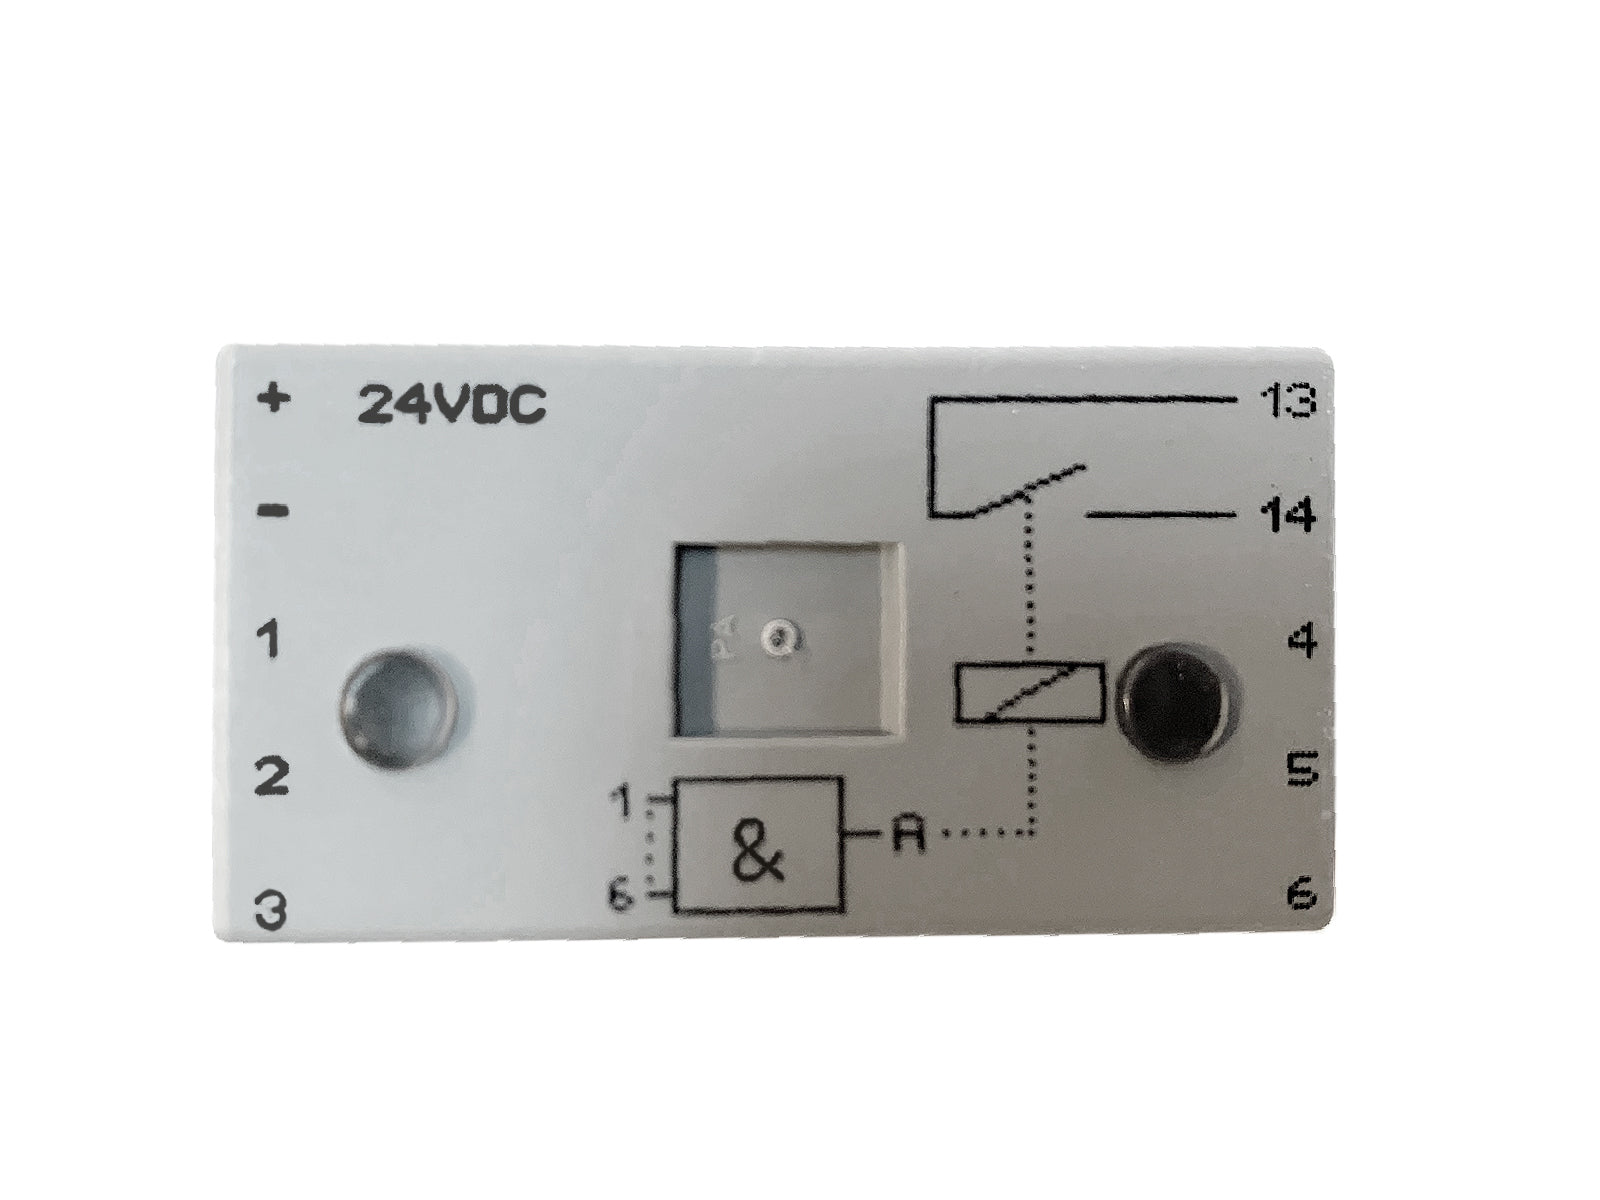 286-304/002-000 Wago relay module - ppdistributors